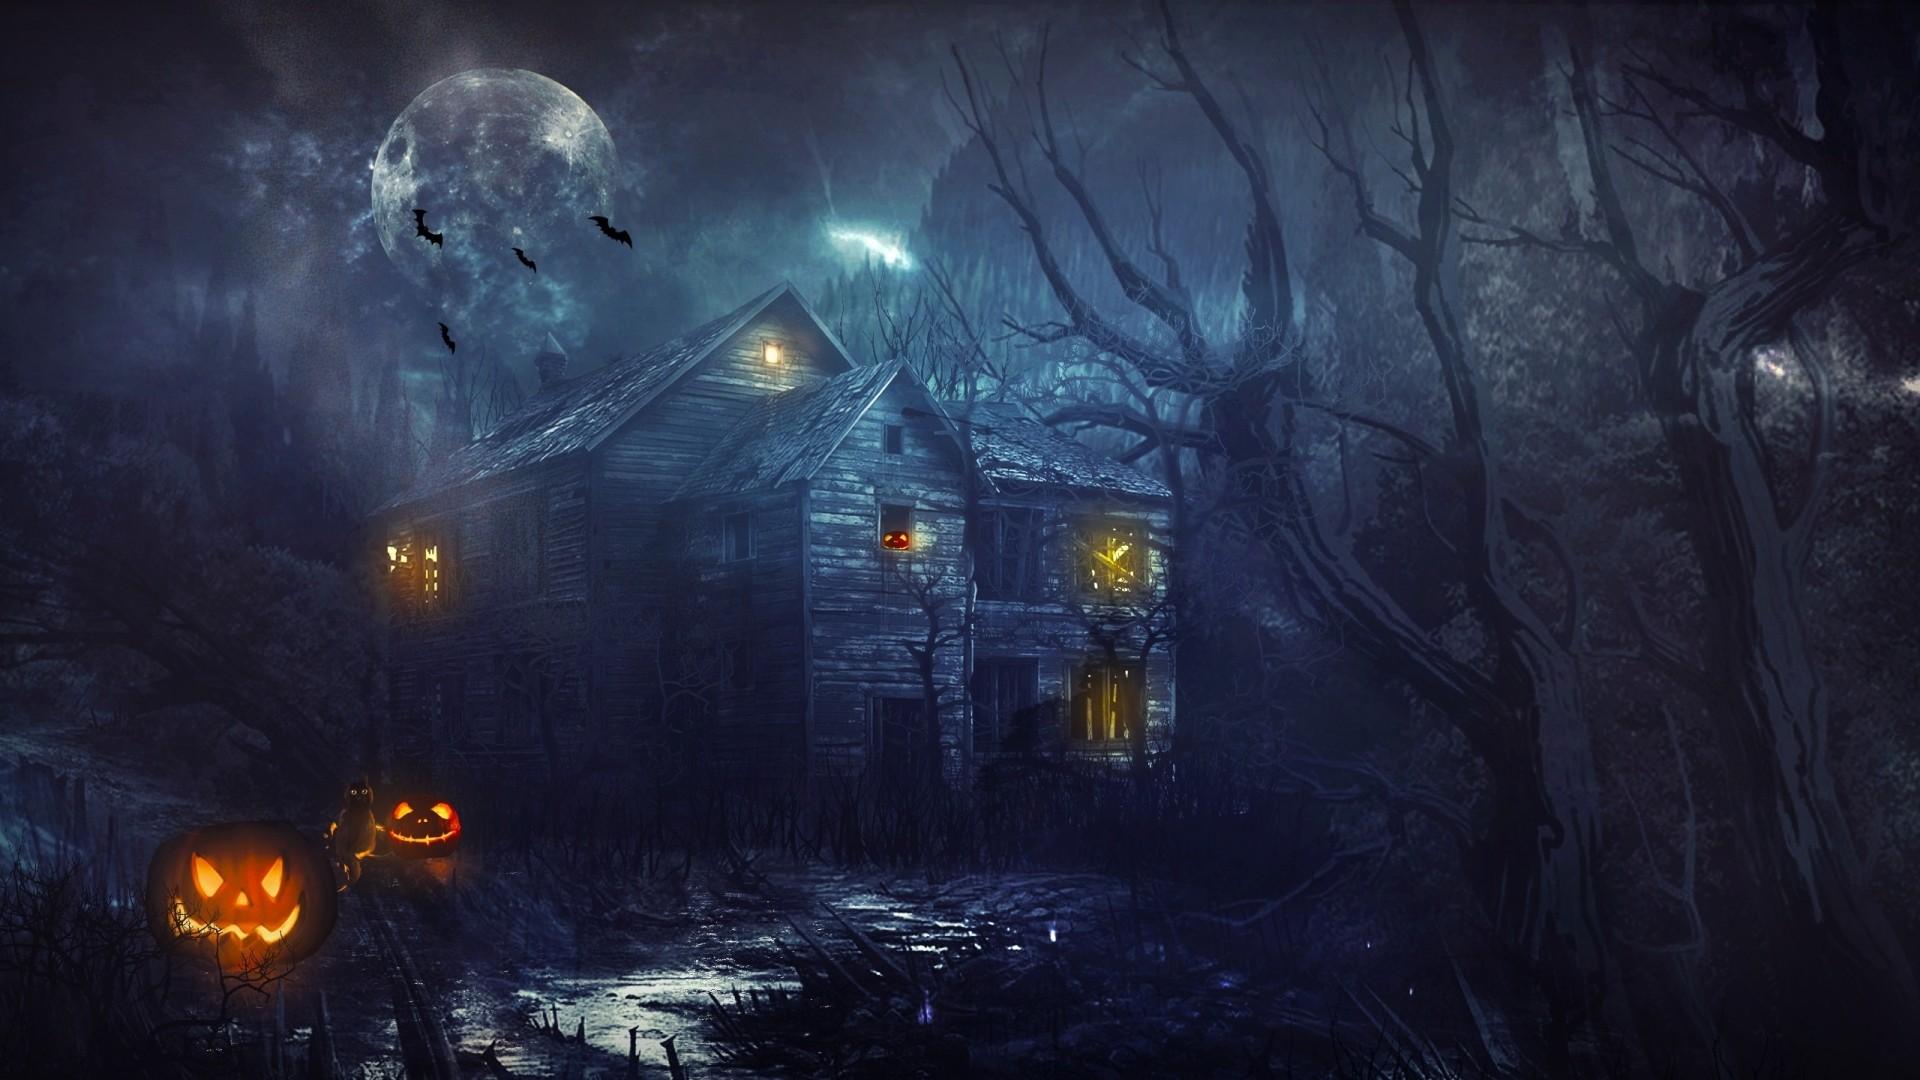 Haunted House Wallpaper Desktop background picture